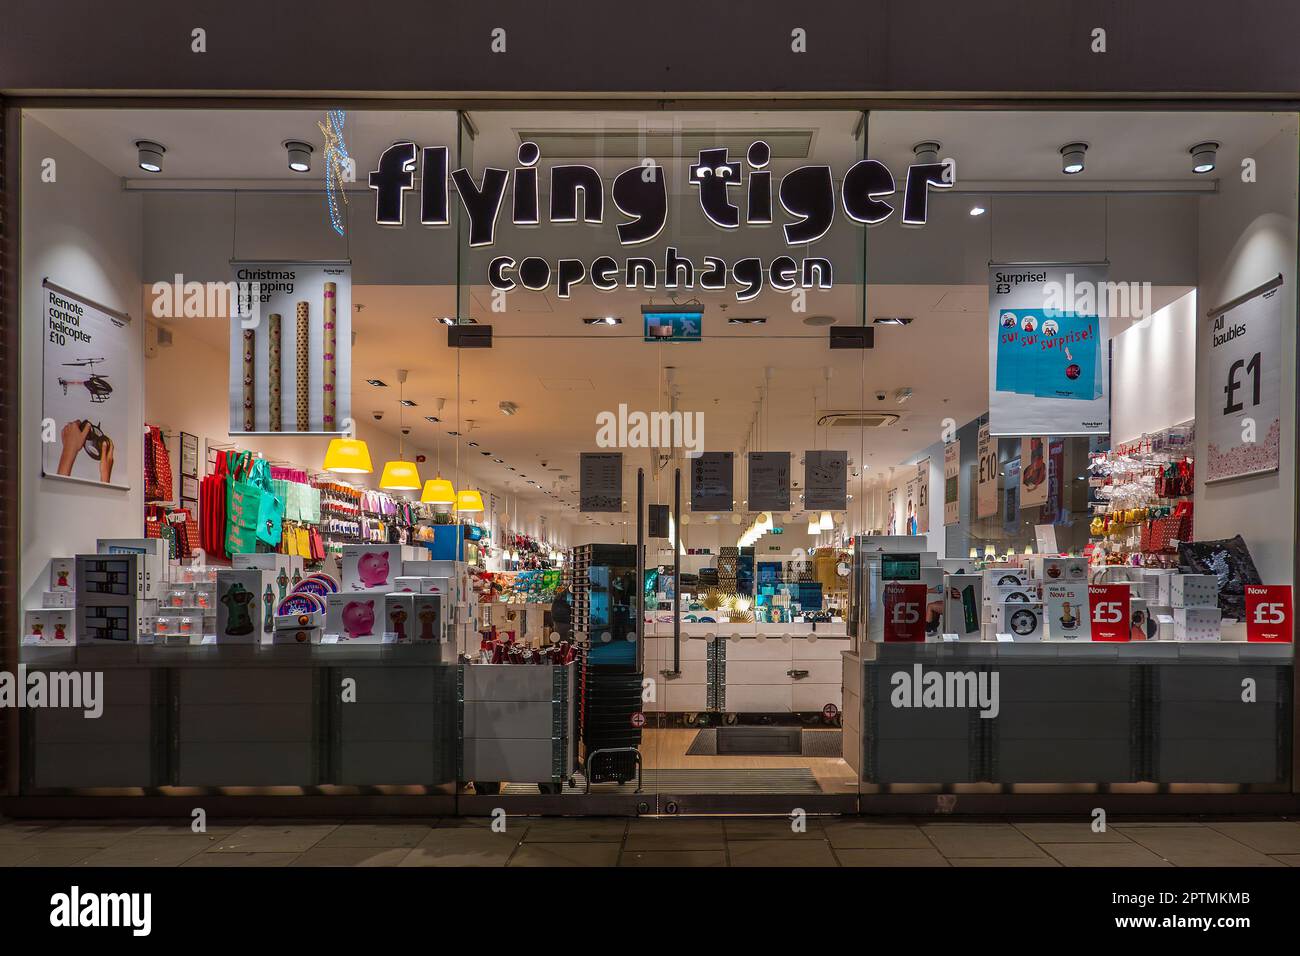 Flying Tiger,Copenhagan,Store,Window Display,Whitefriars,Shopping Centre,Canterbury,Kent,England Stock Photo